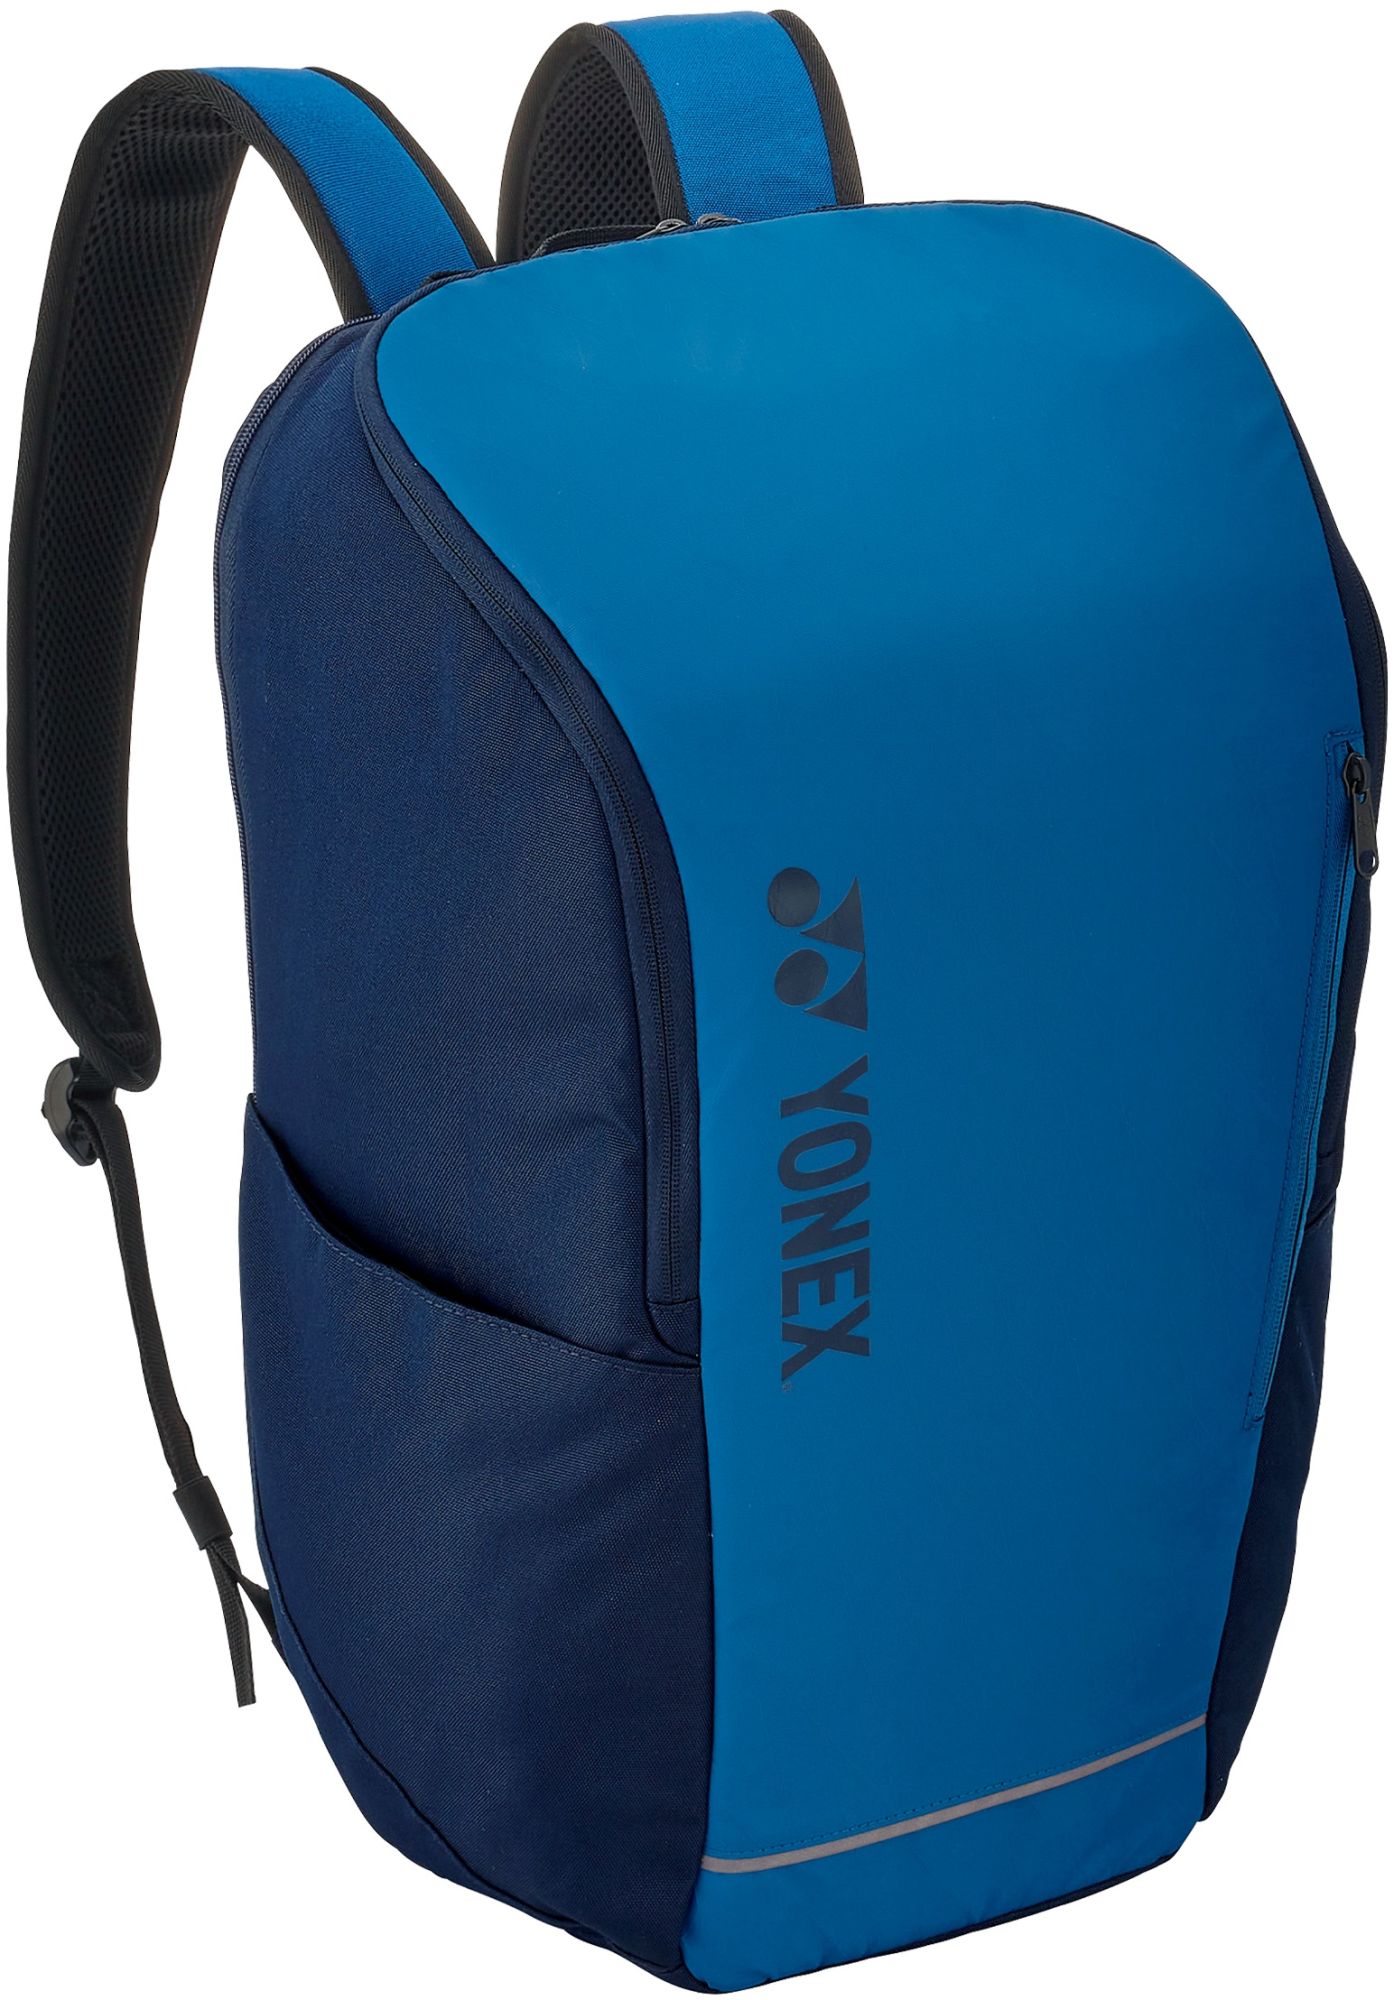 Yonex Team S Tennis Backpack (Sky Blue)